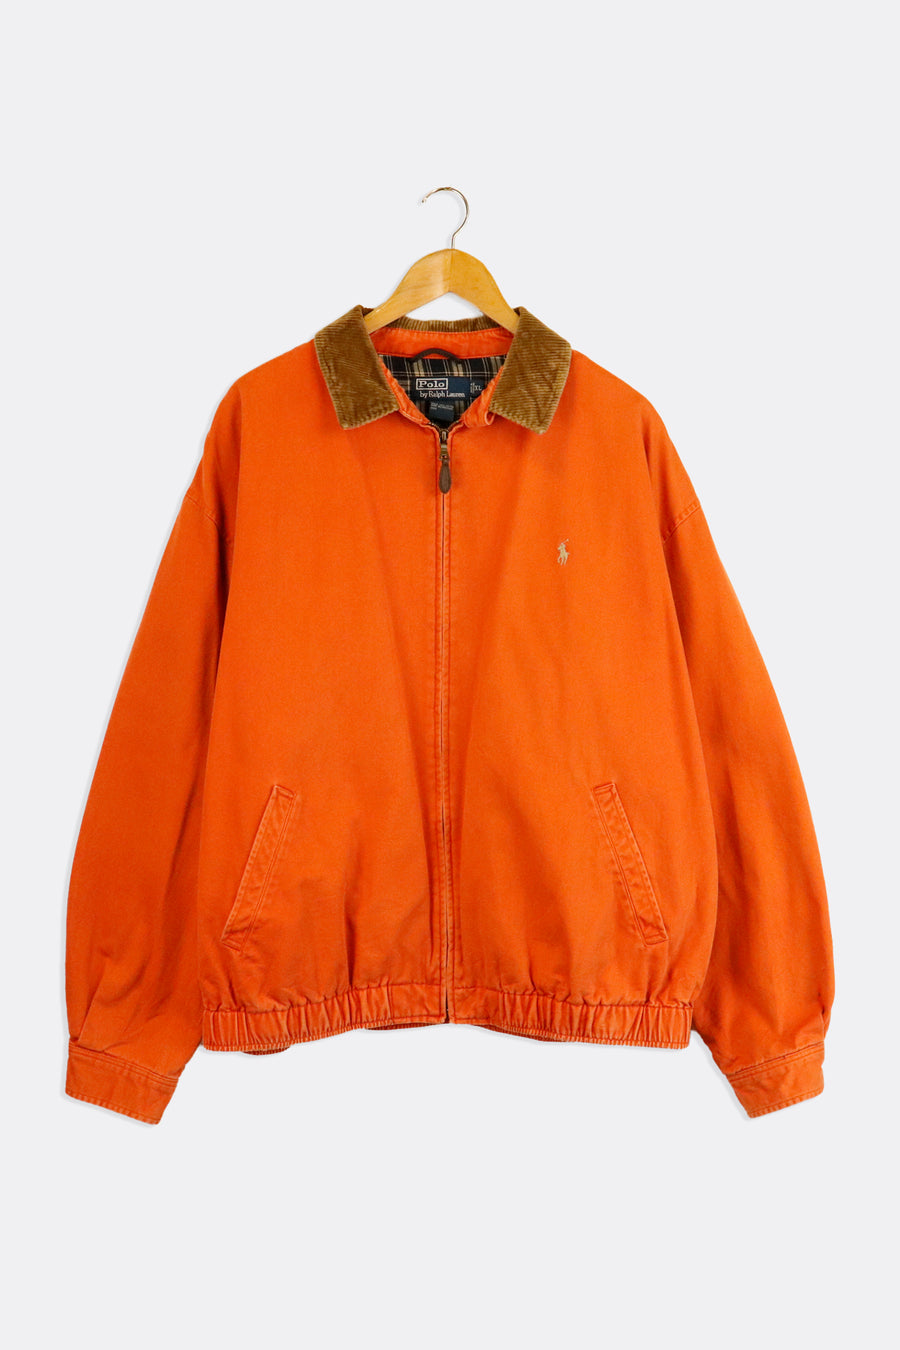 Vintage Nautica Cotton Zip Up Jacket Sz XL – F As In Frank Vintage